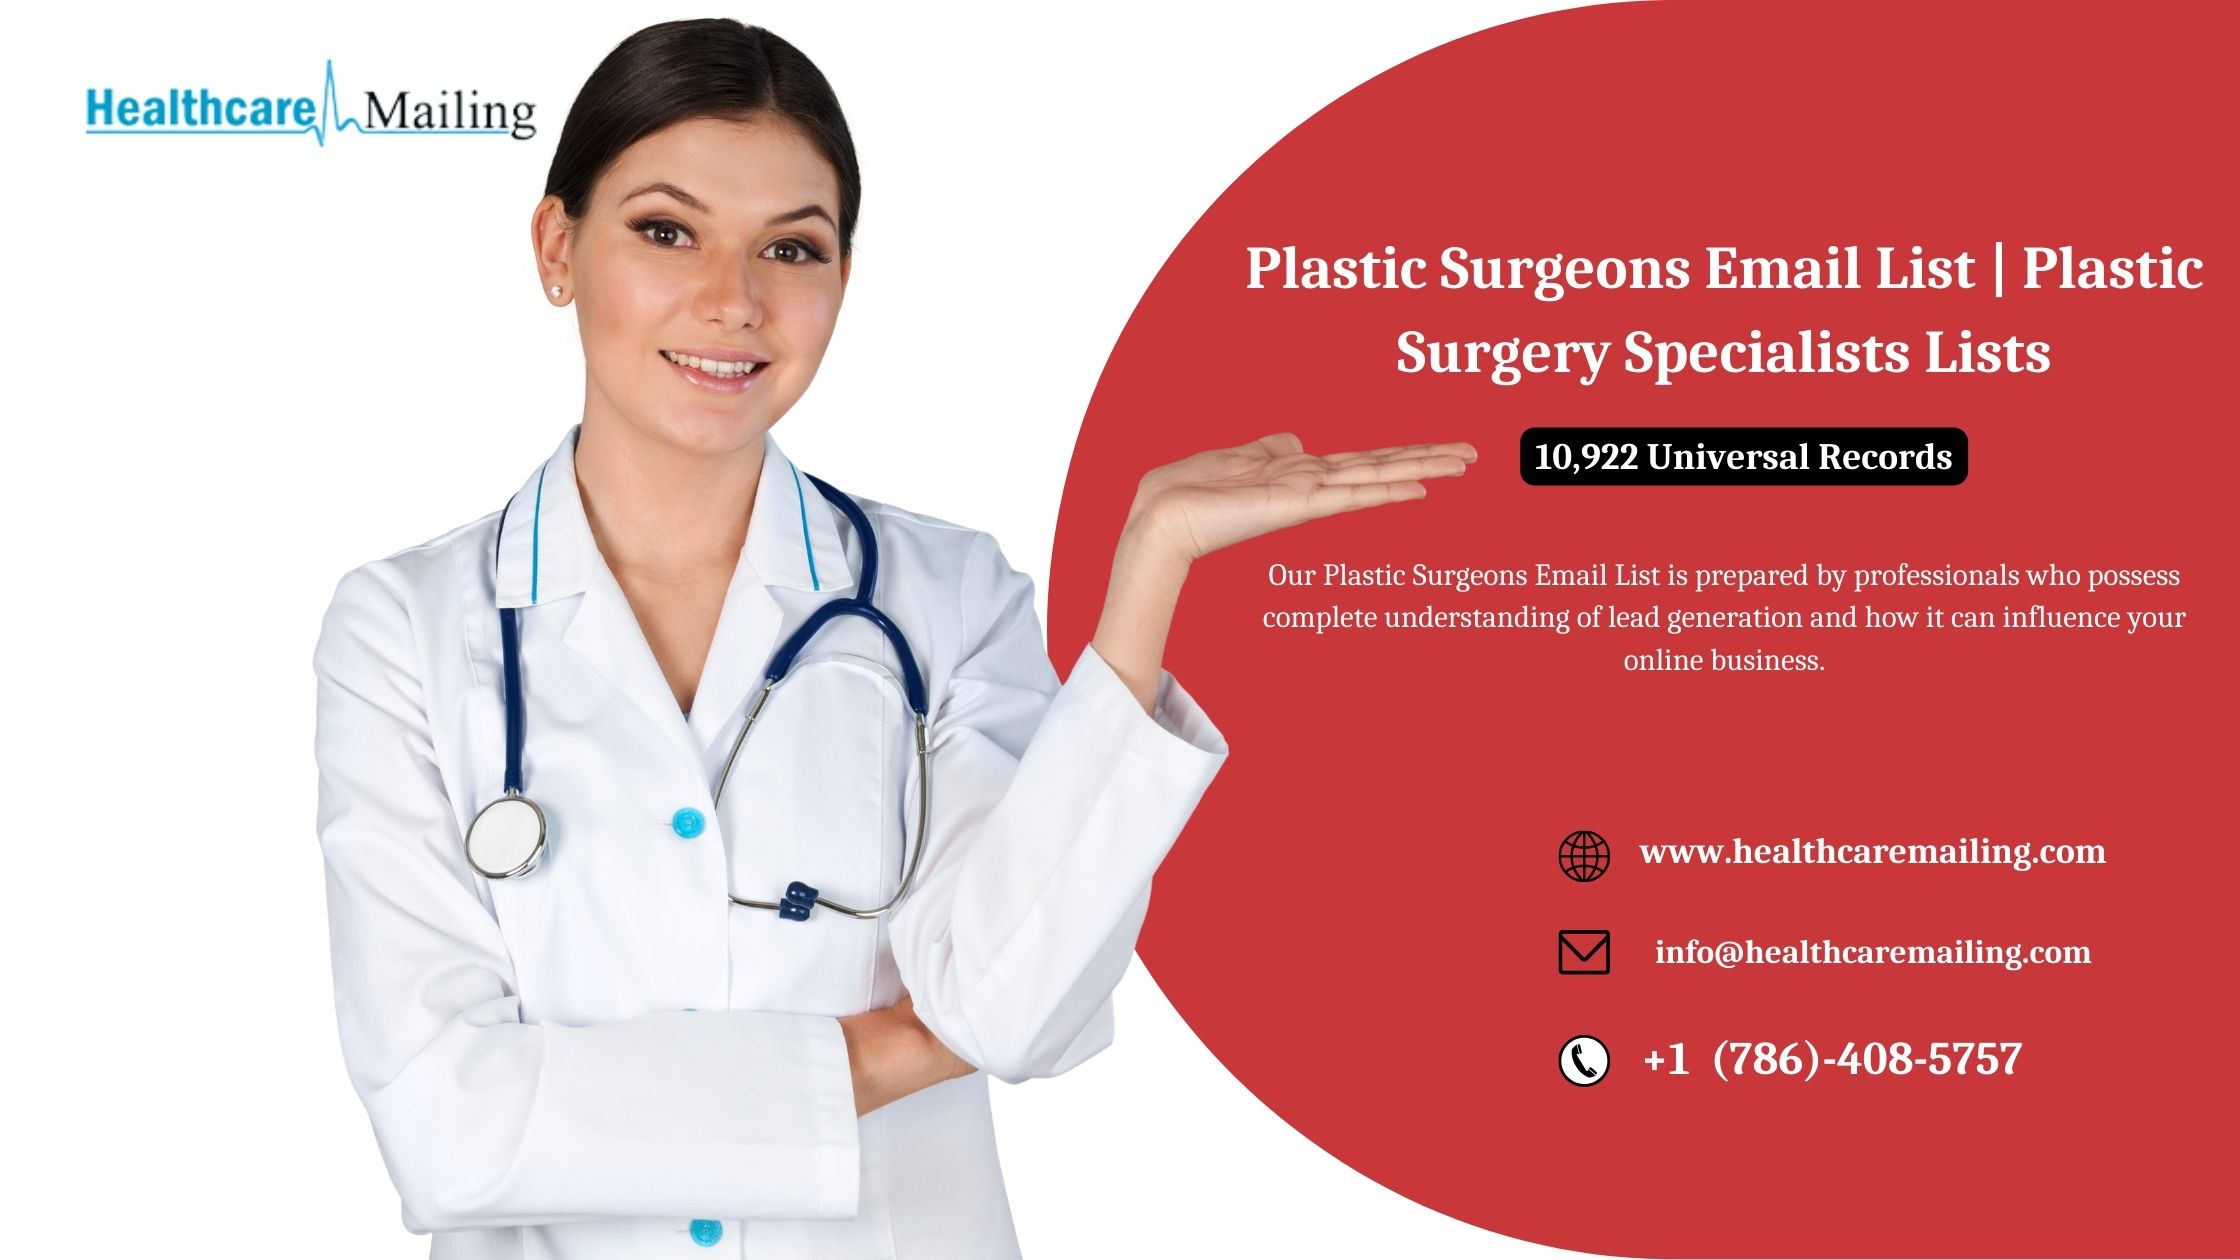 Plastic Surgeons Email List